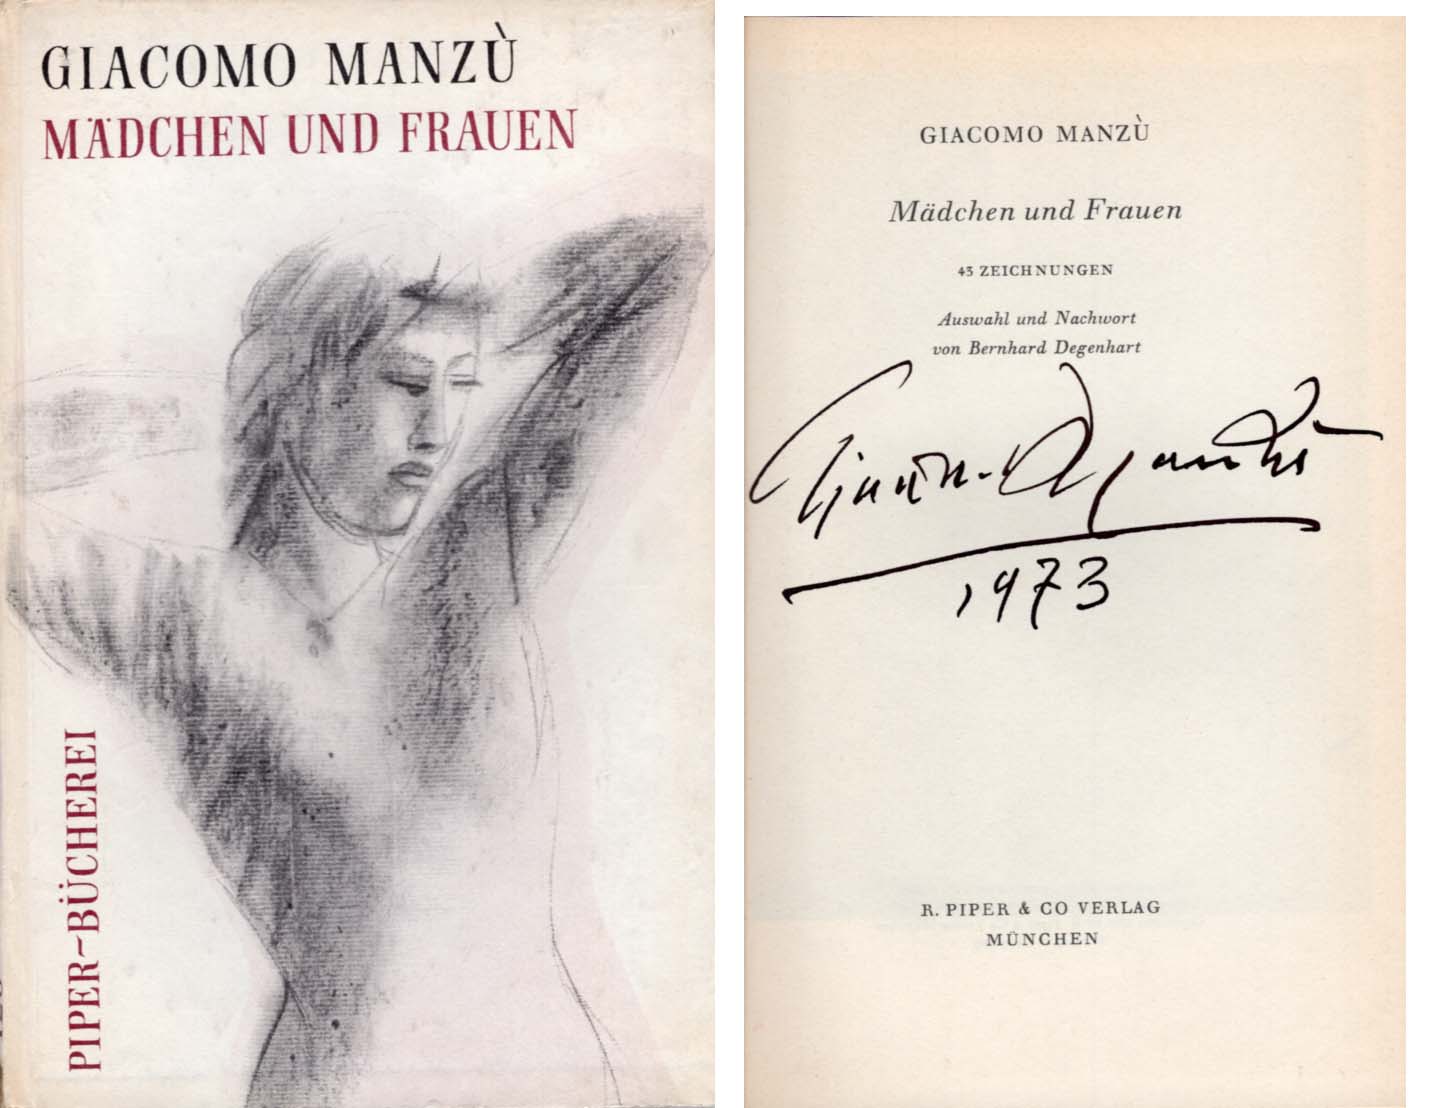 Giacomo Manzù Autograph Autogramm | ID 7878132727957